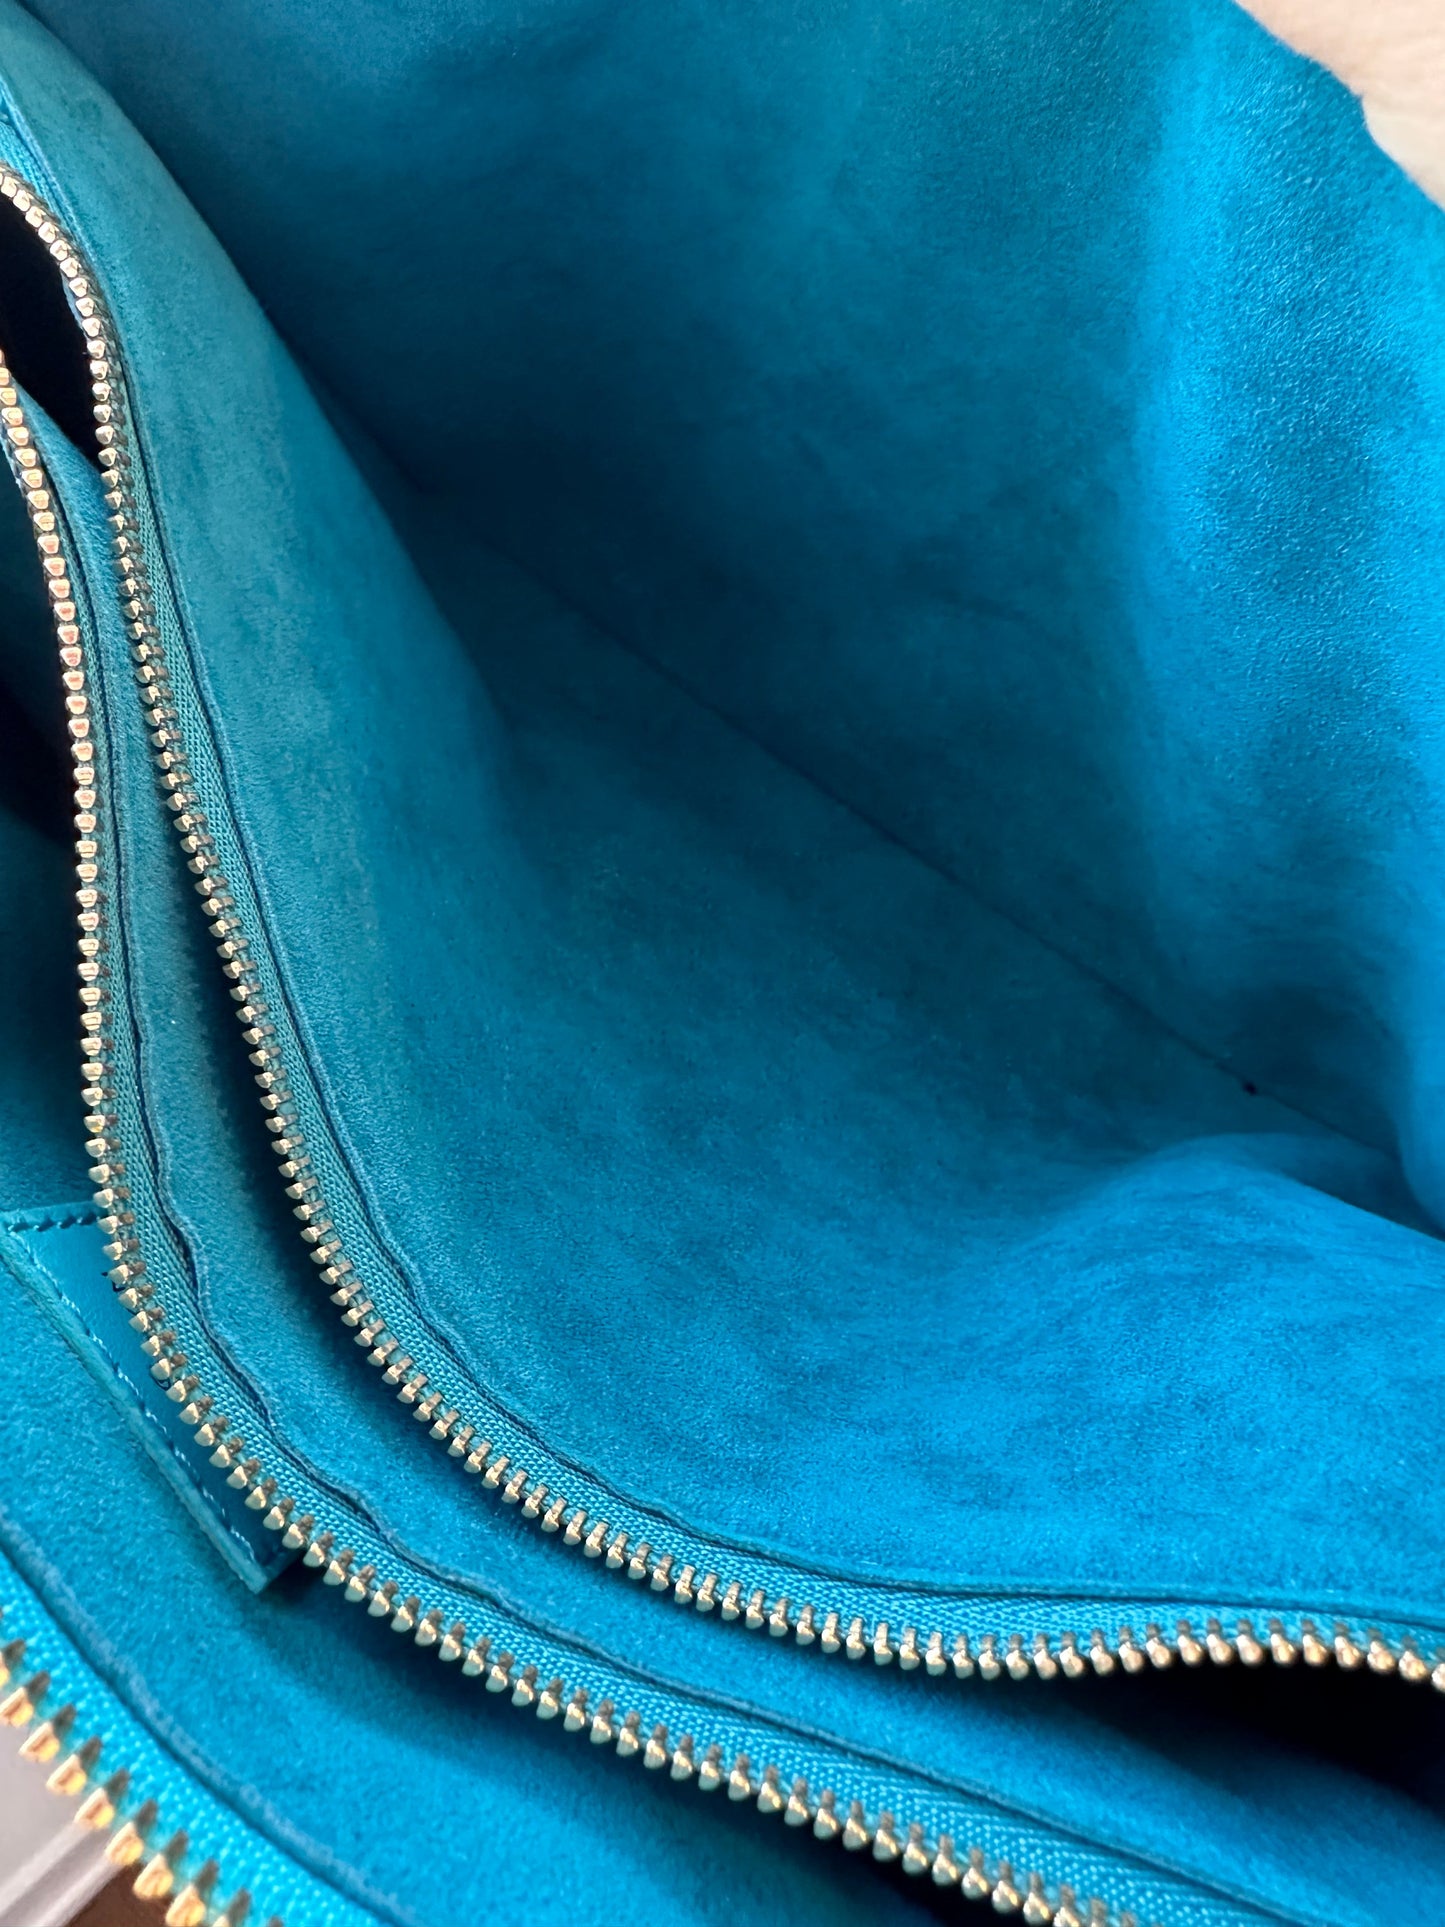 Louis Vuitton Monogram Coussin PM Turquoise - Carly Julia Sells Stuff, LLC